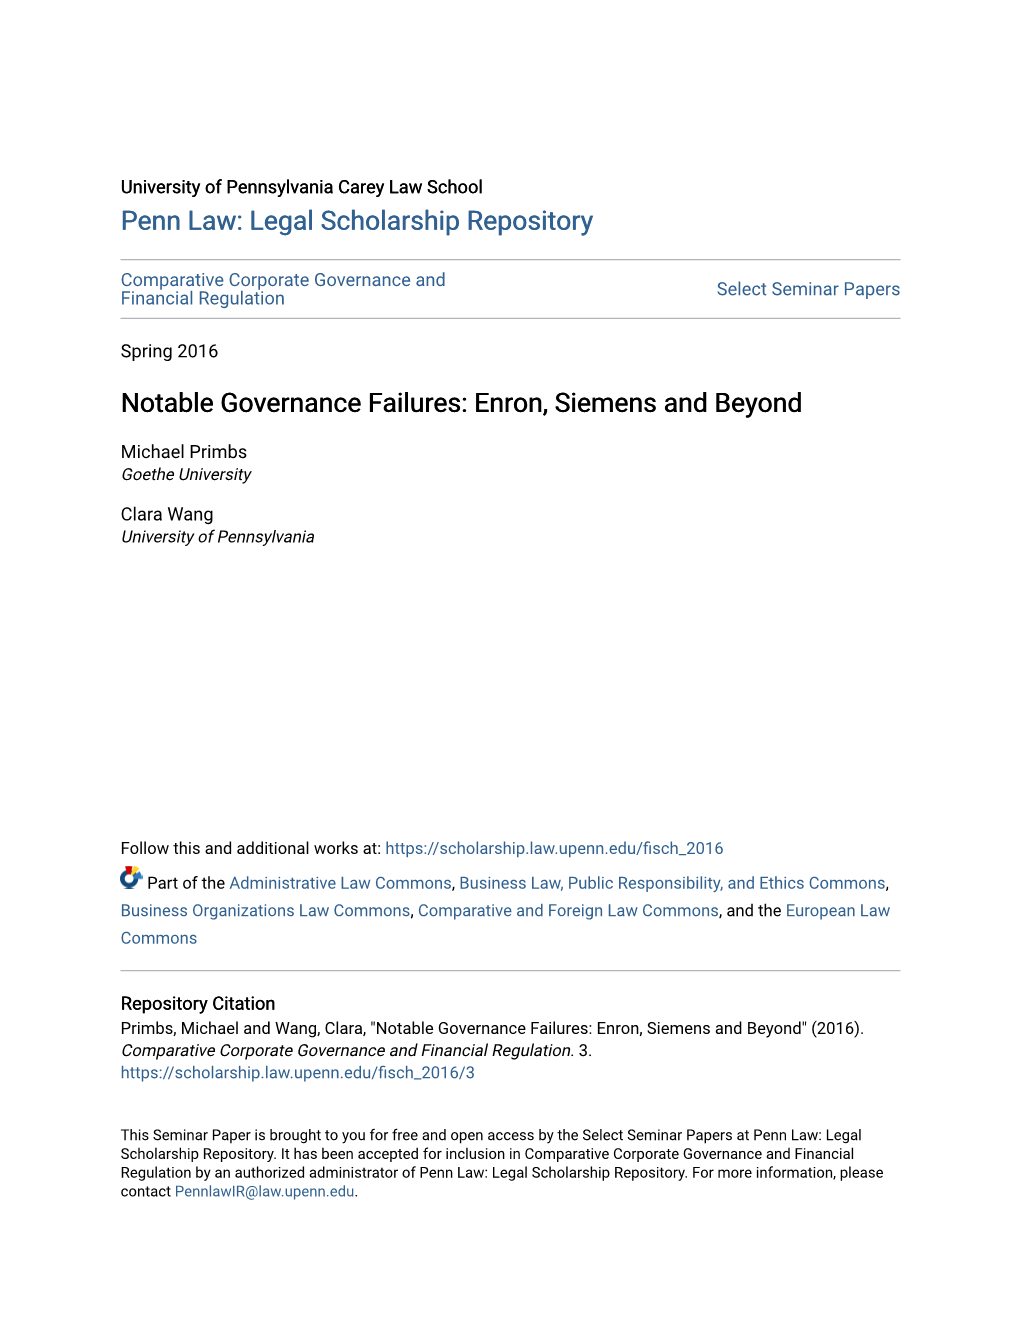 Notable Governance Failures: Enron, Siemens and Beyond